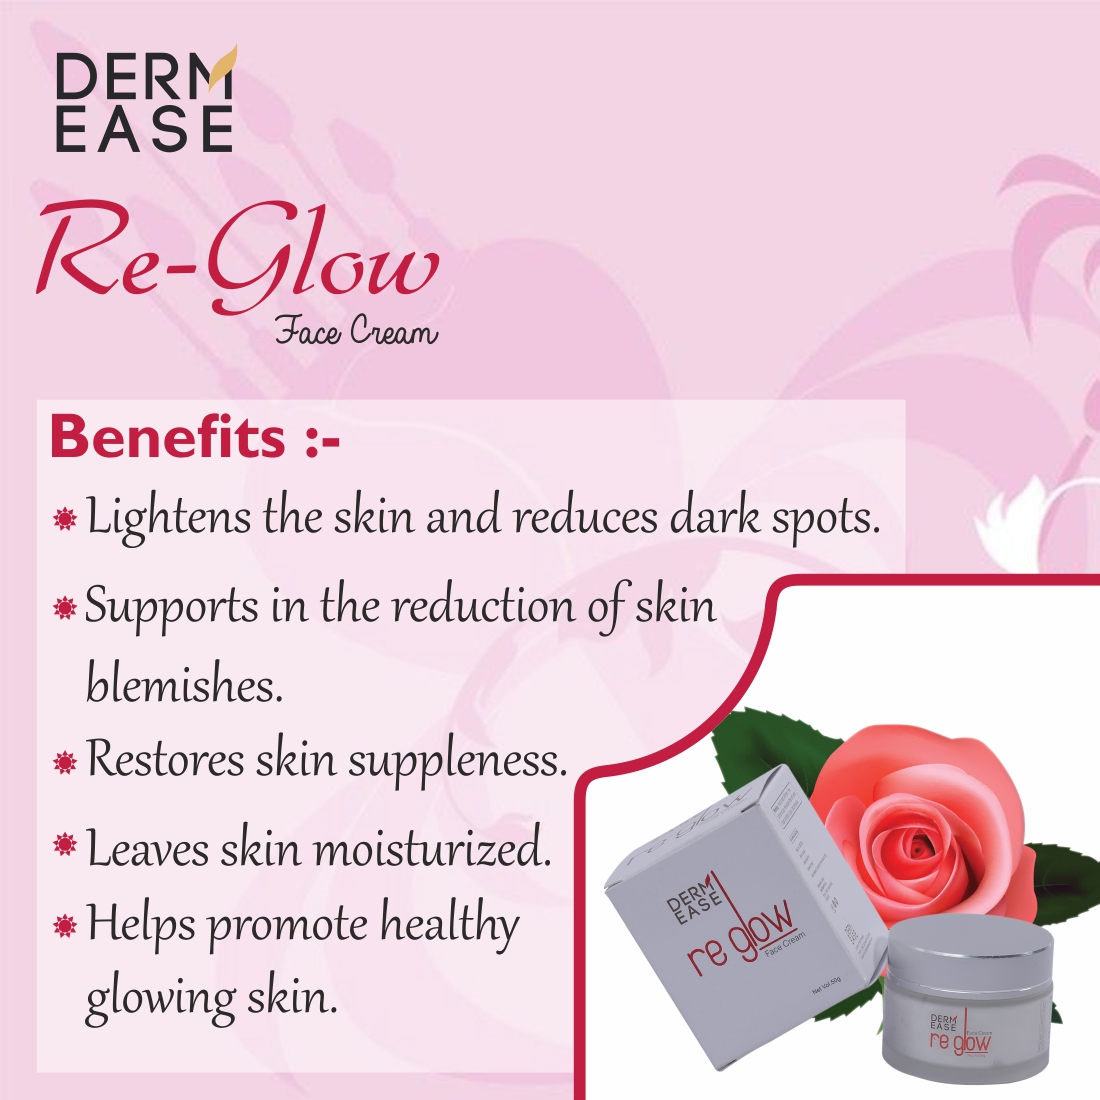 DERM EASE Re Glow Face Cream